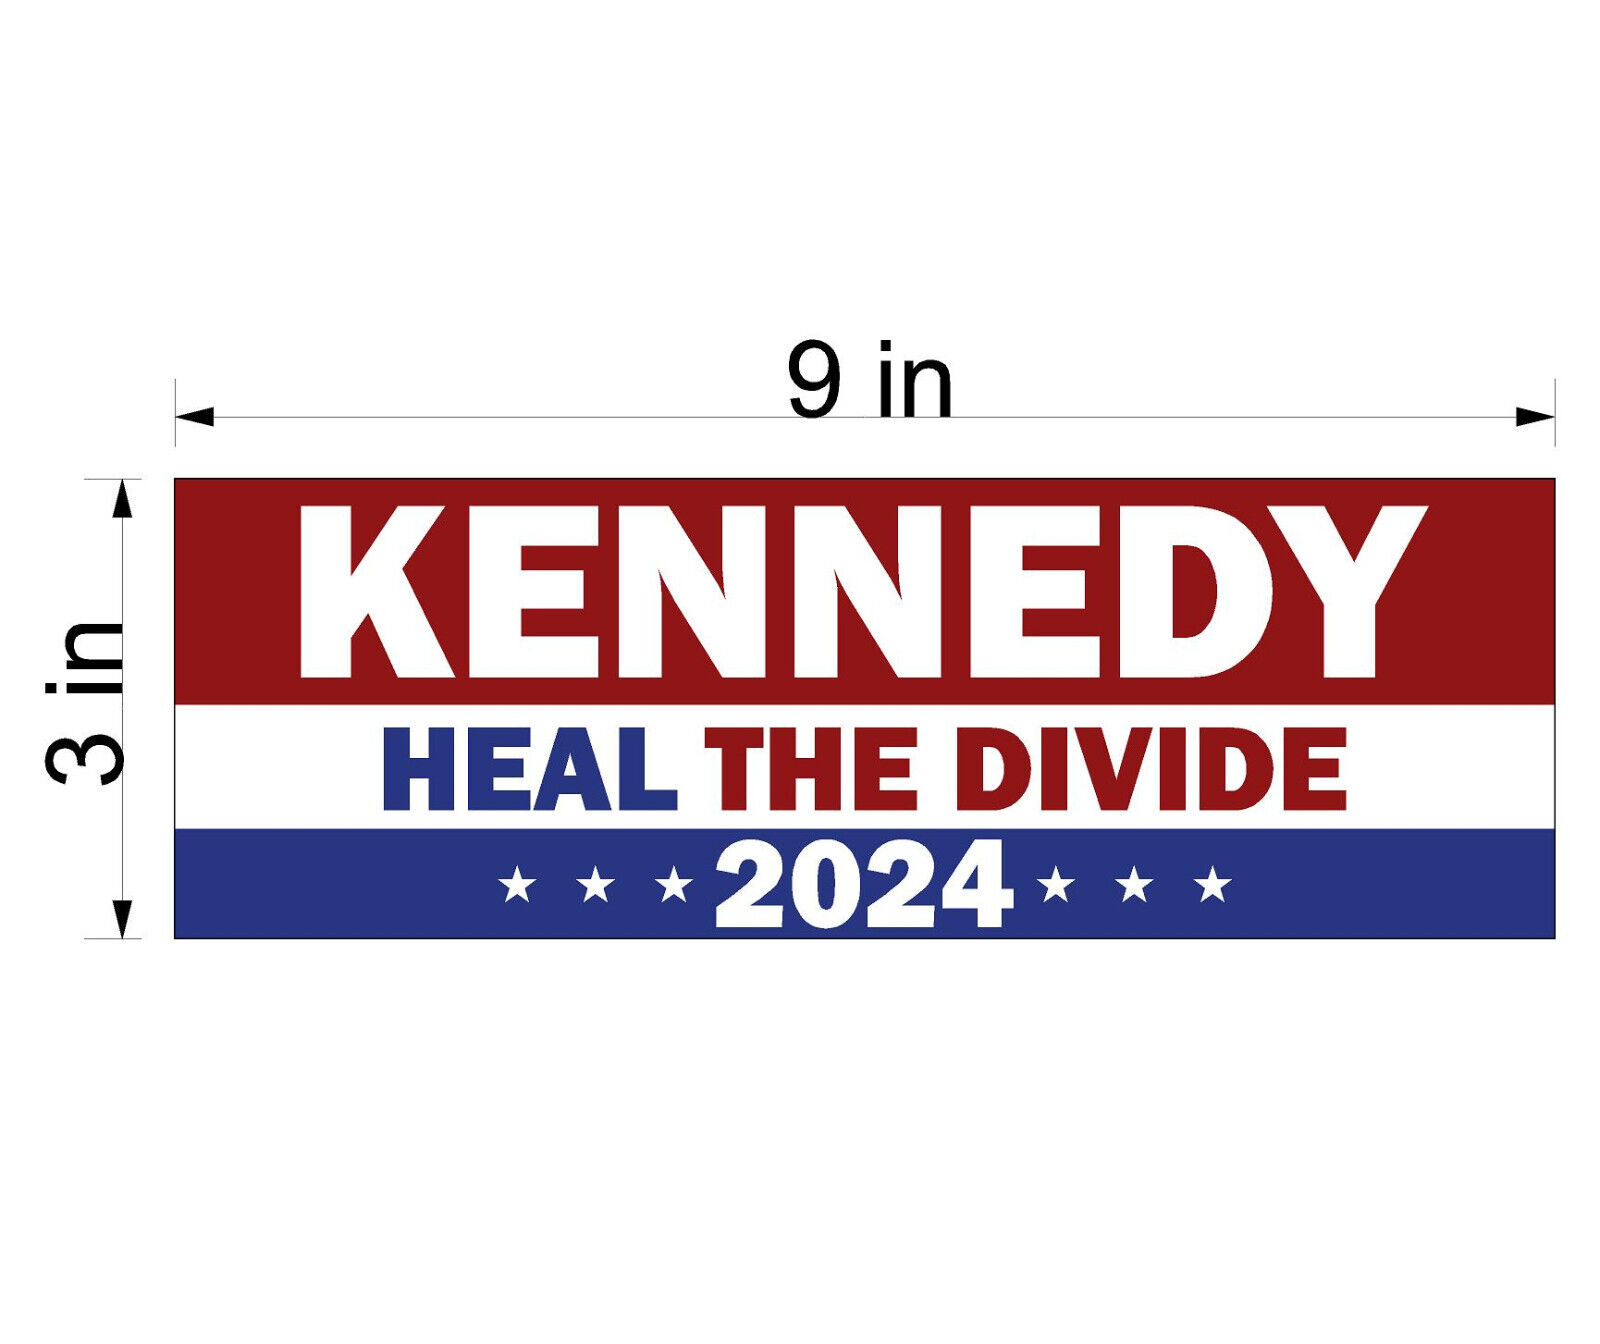 KENNEDY STICKER 2024 PRESIDENTIAL DECAL WINDOW BUMPER STICKER - HEAL THE DIVIDE